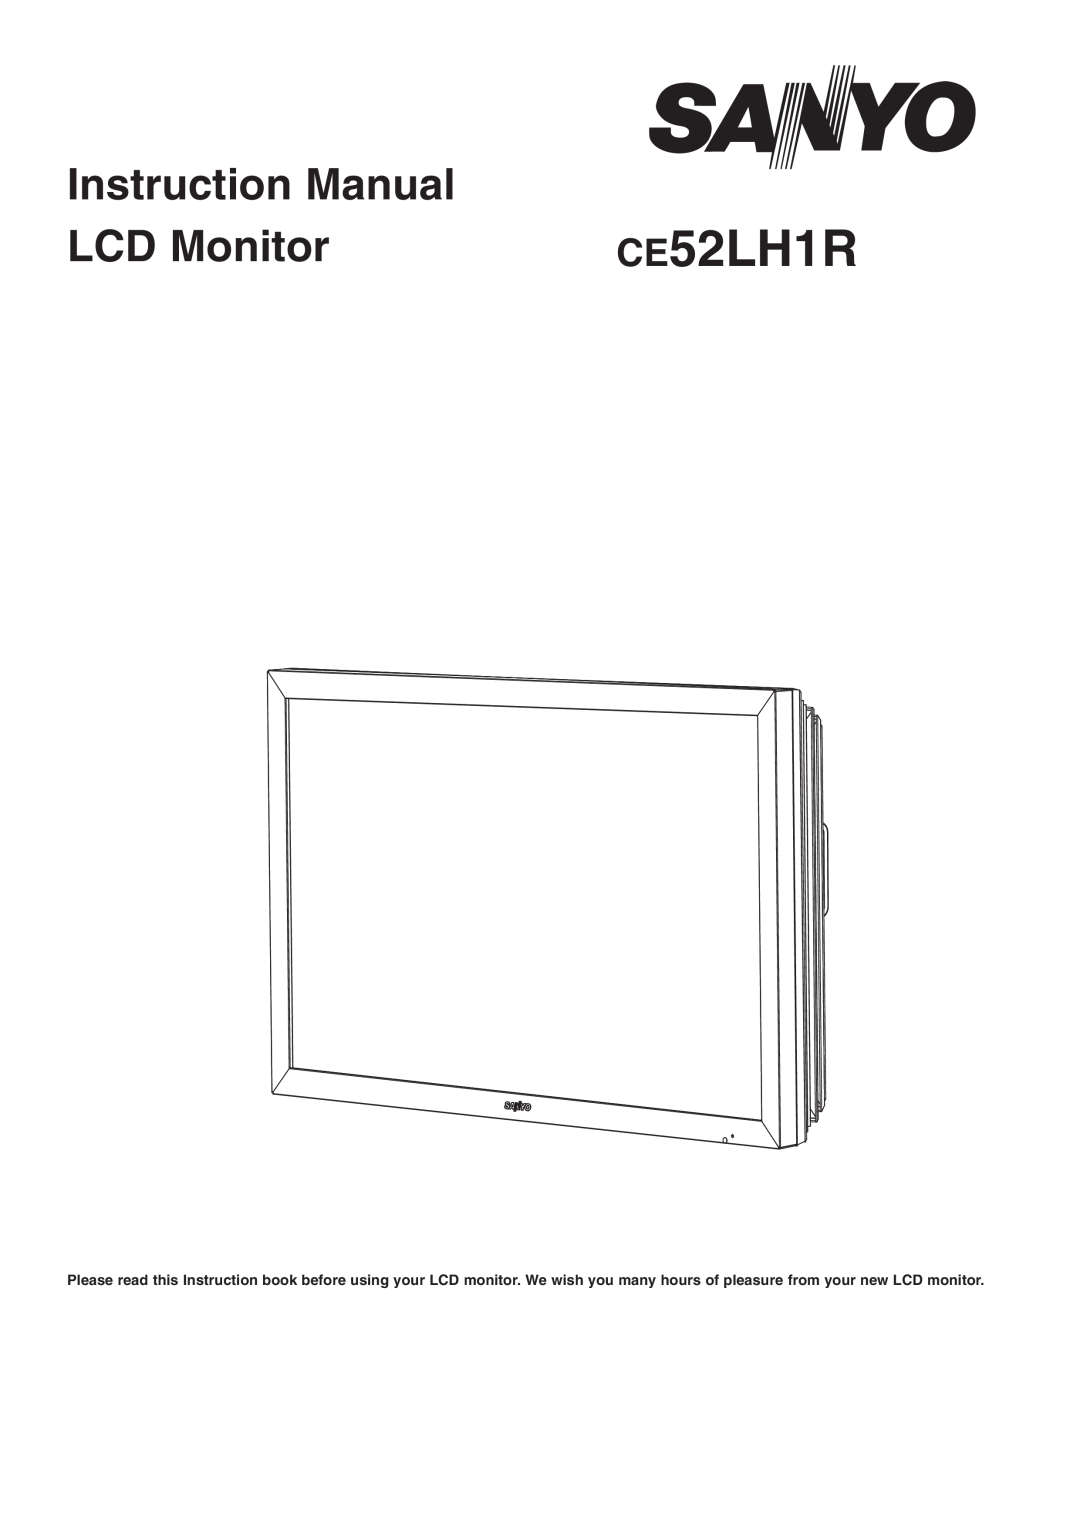 Sanyo CE52LH1R instruction manual LCD Monitor 